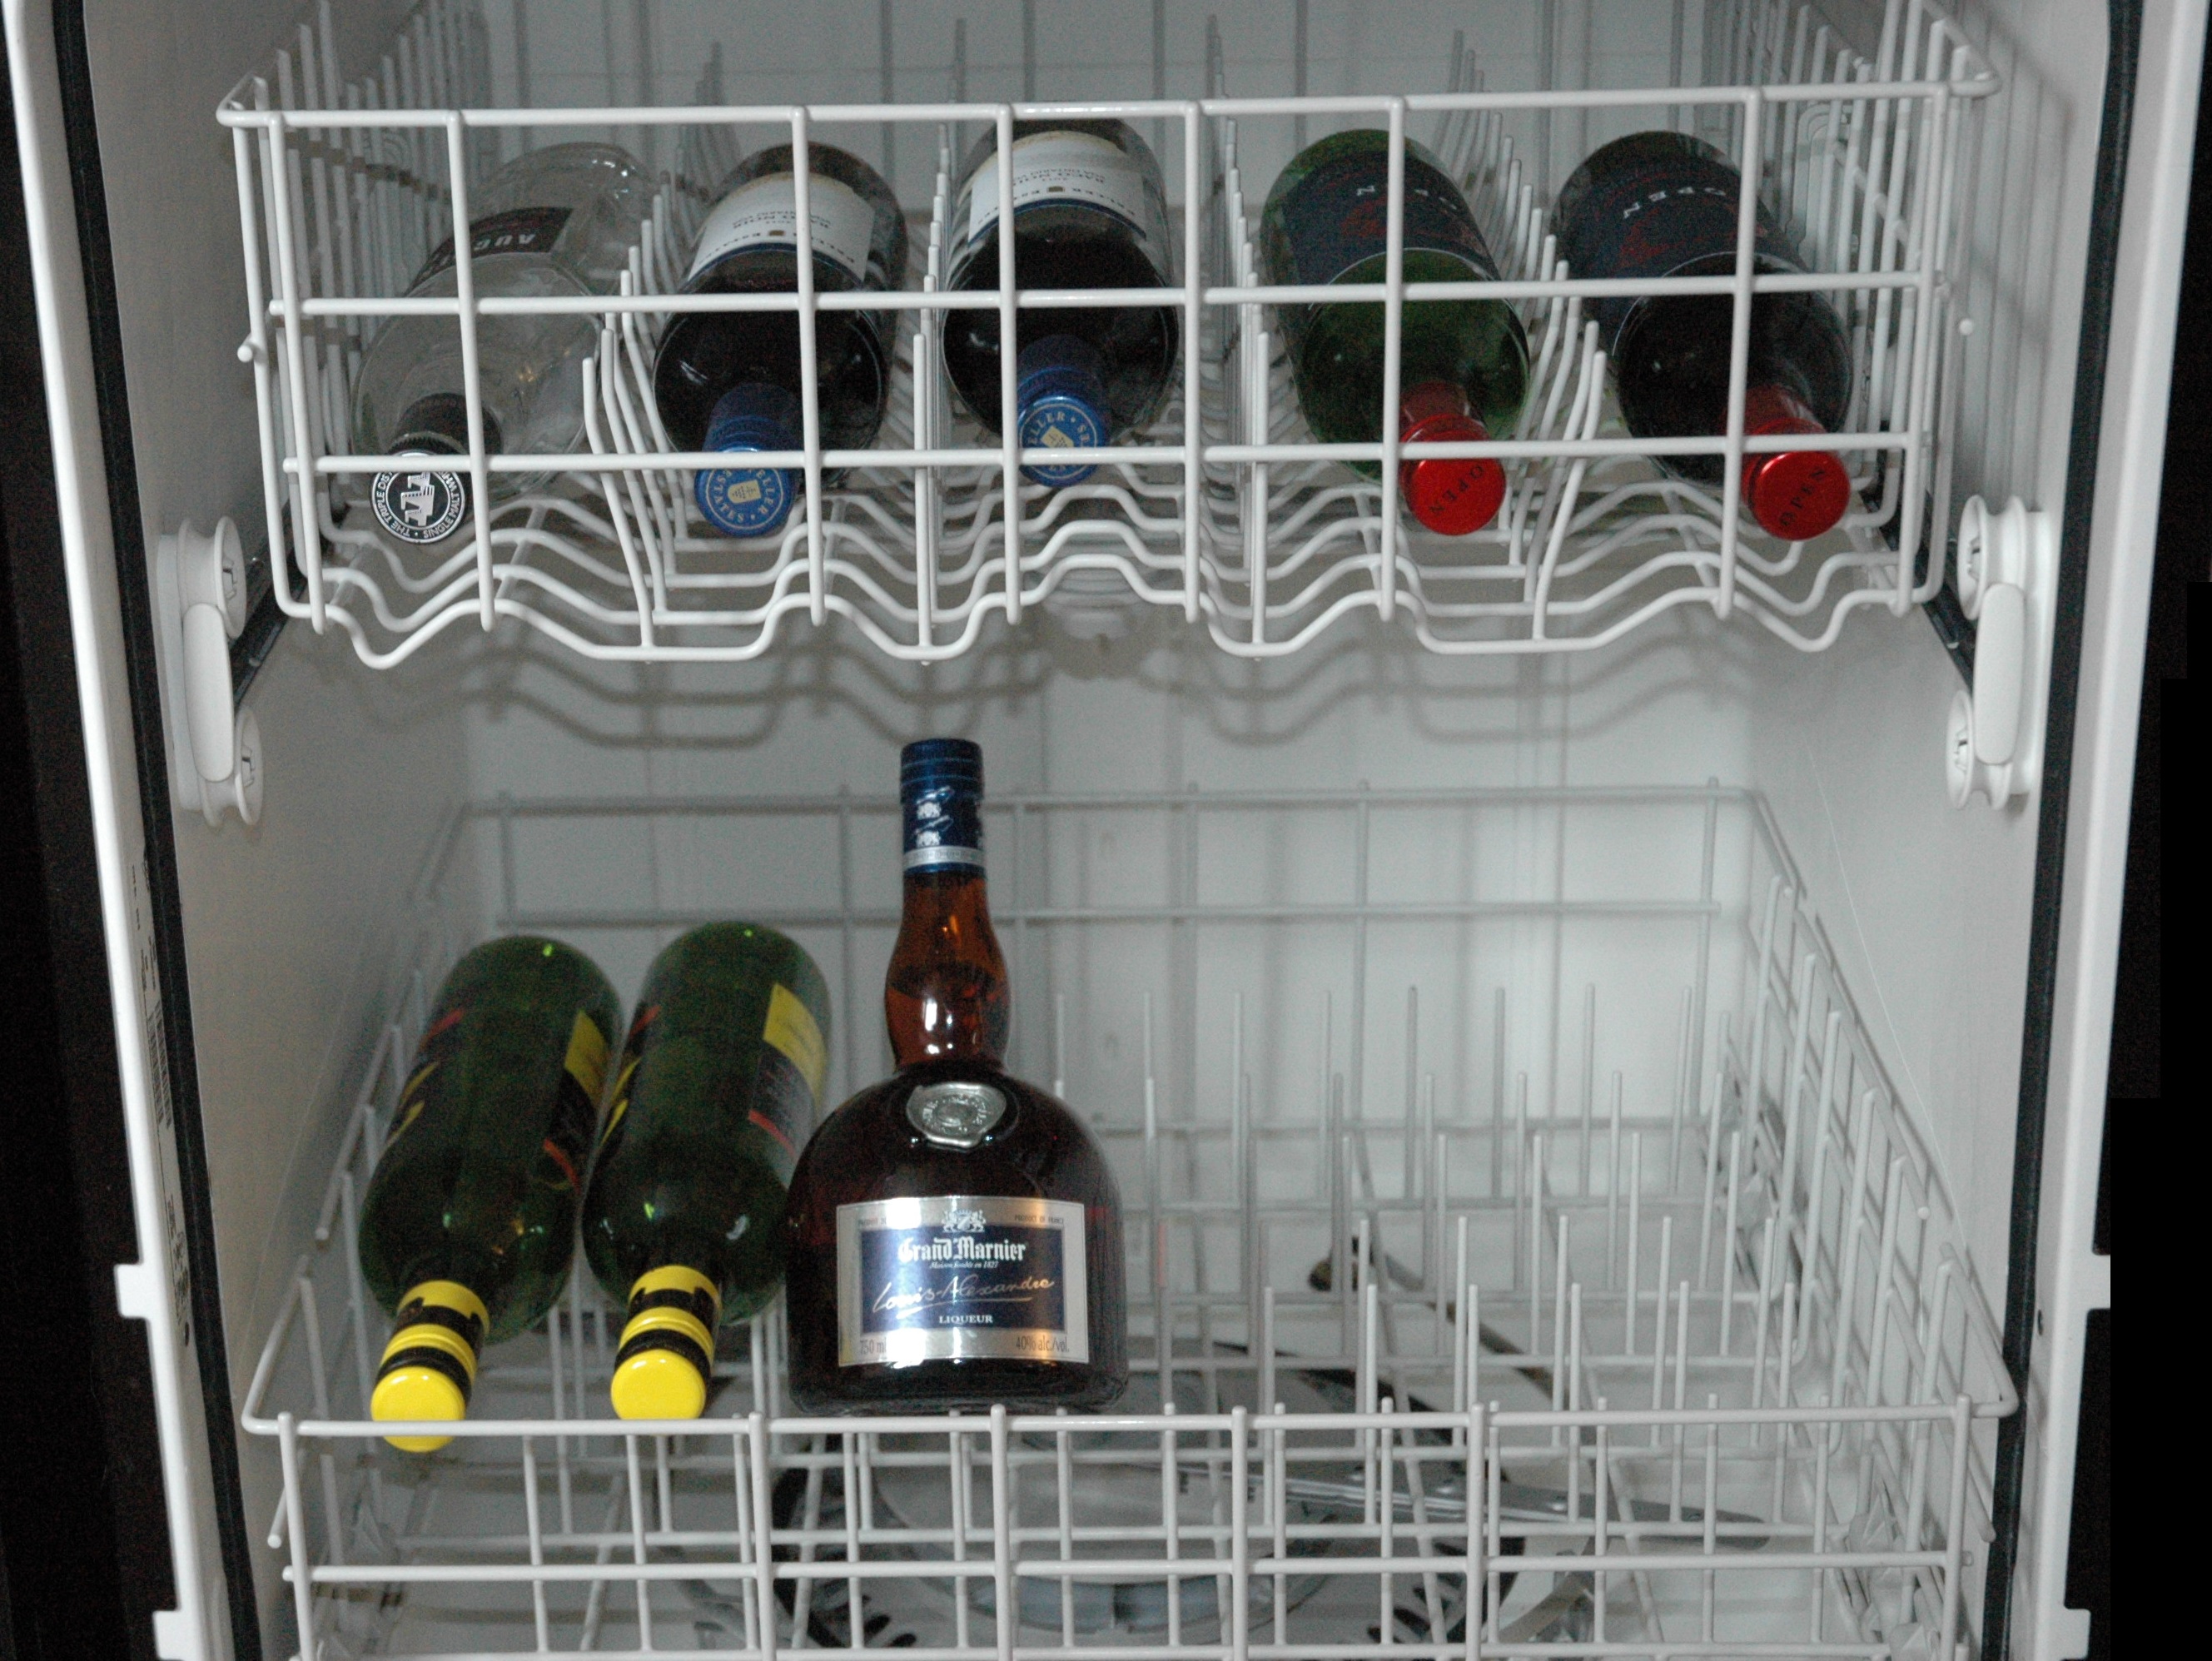 Dishwasher is a Wine Cellar